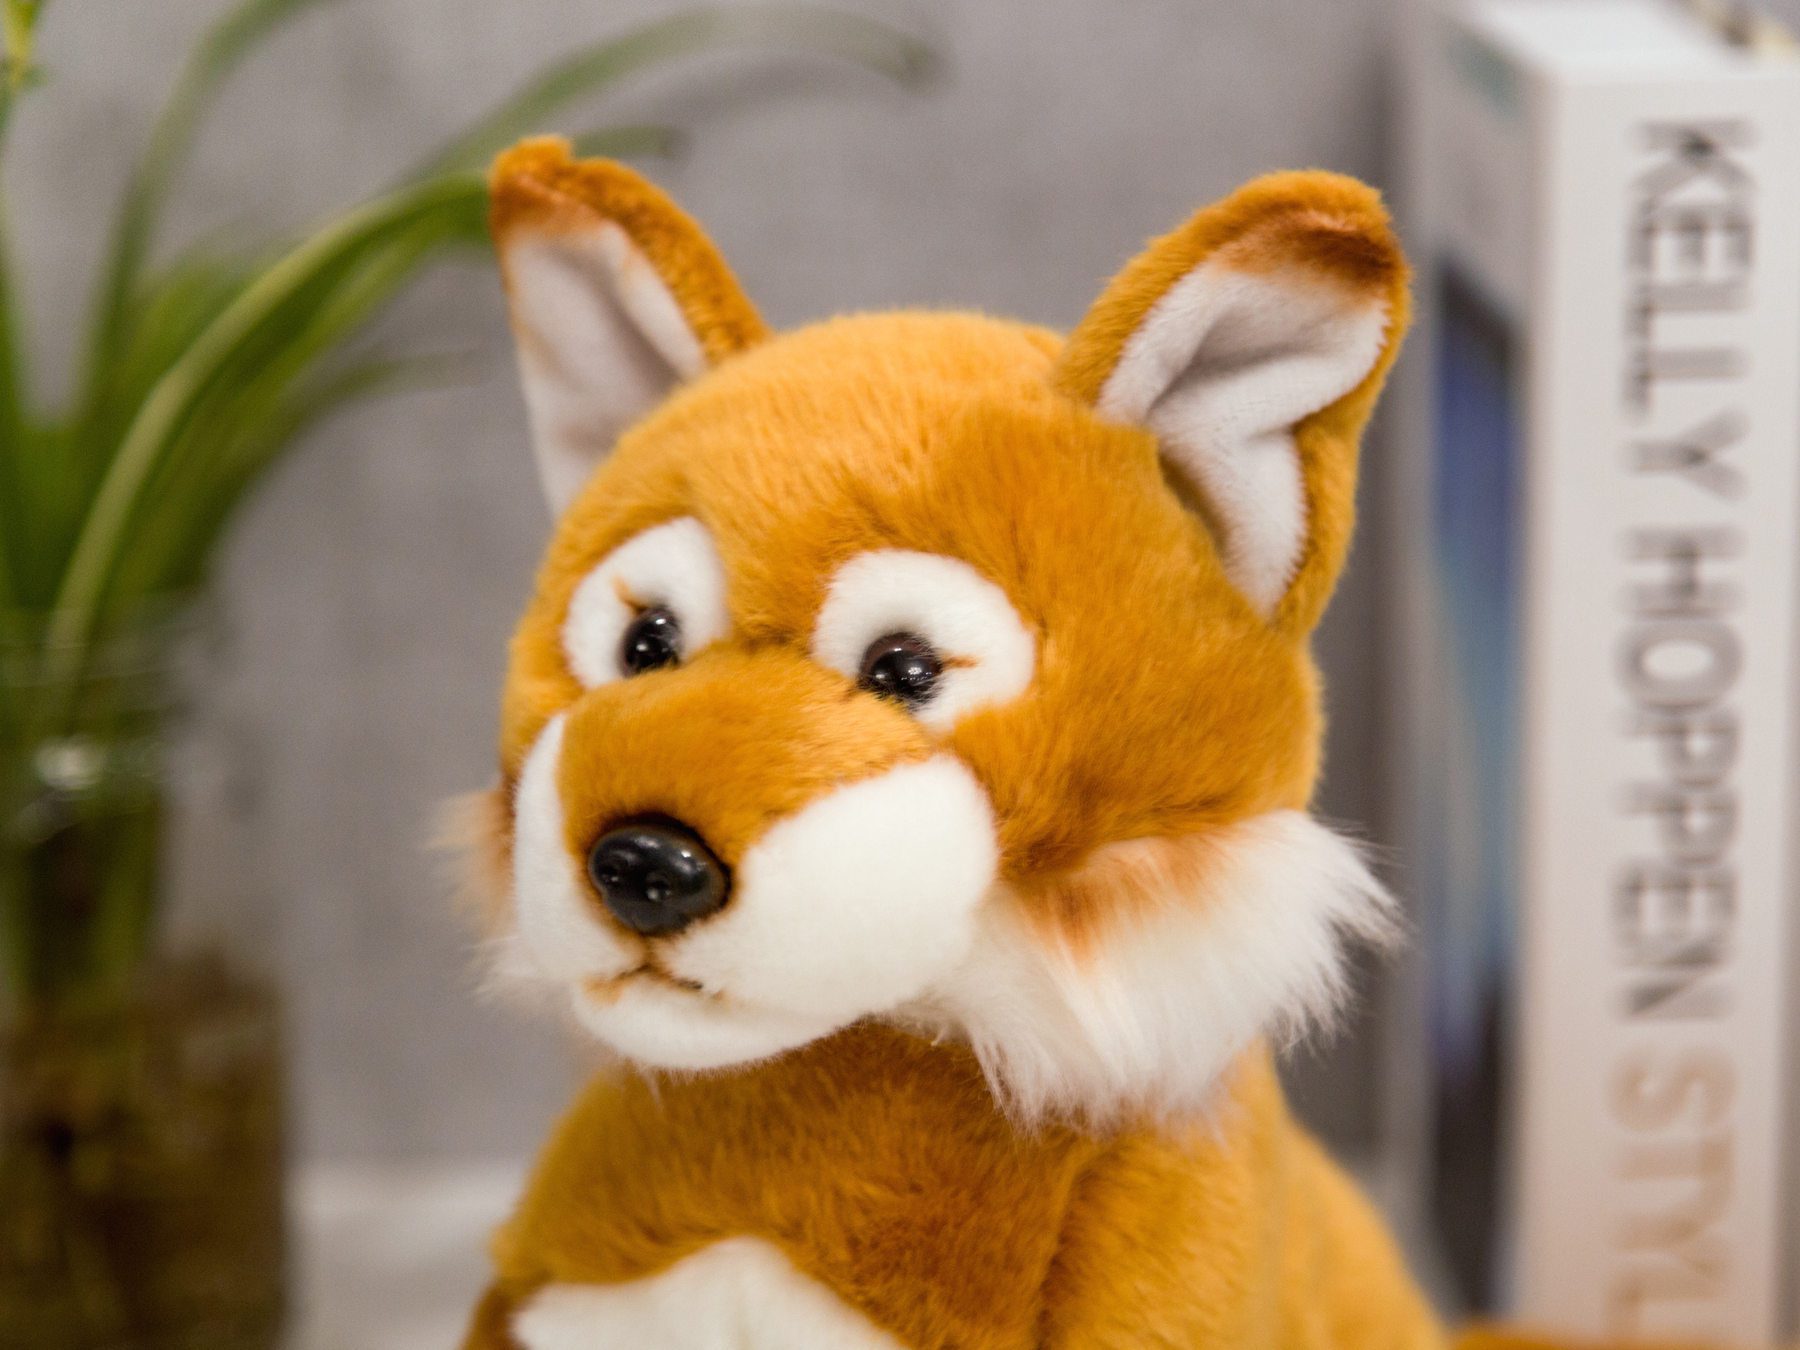 Rainbow Fox Stuffed Animal